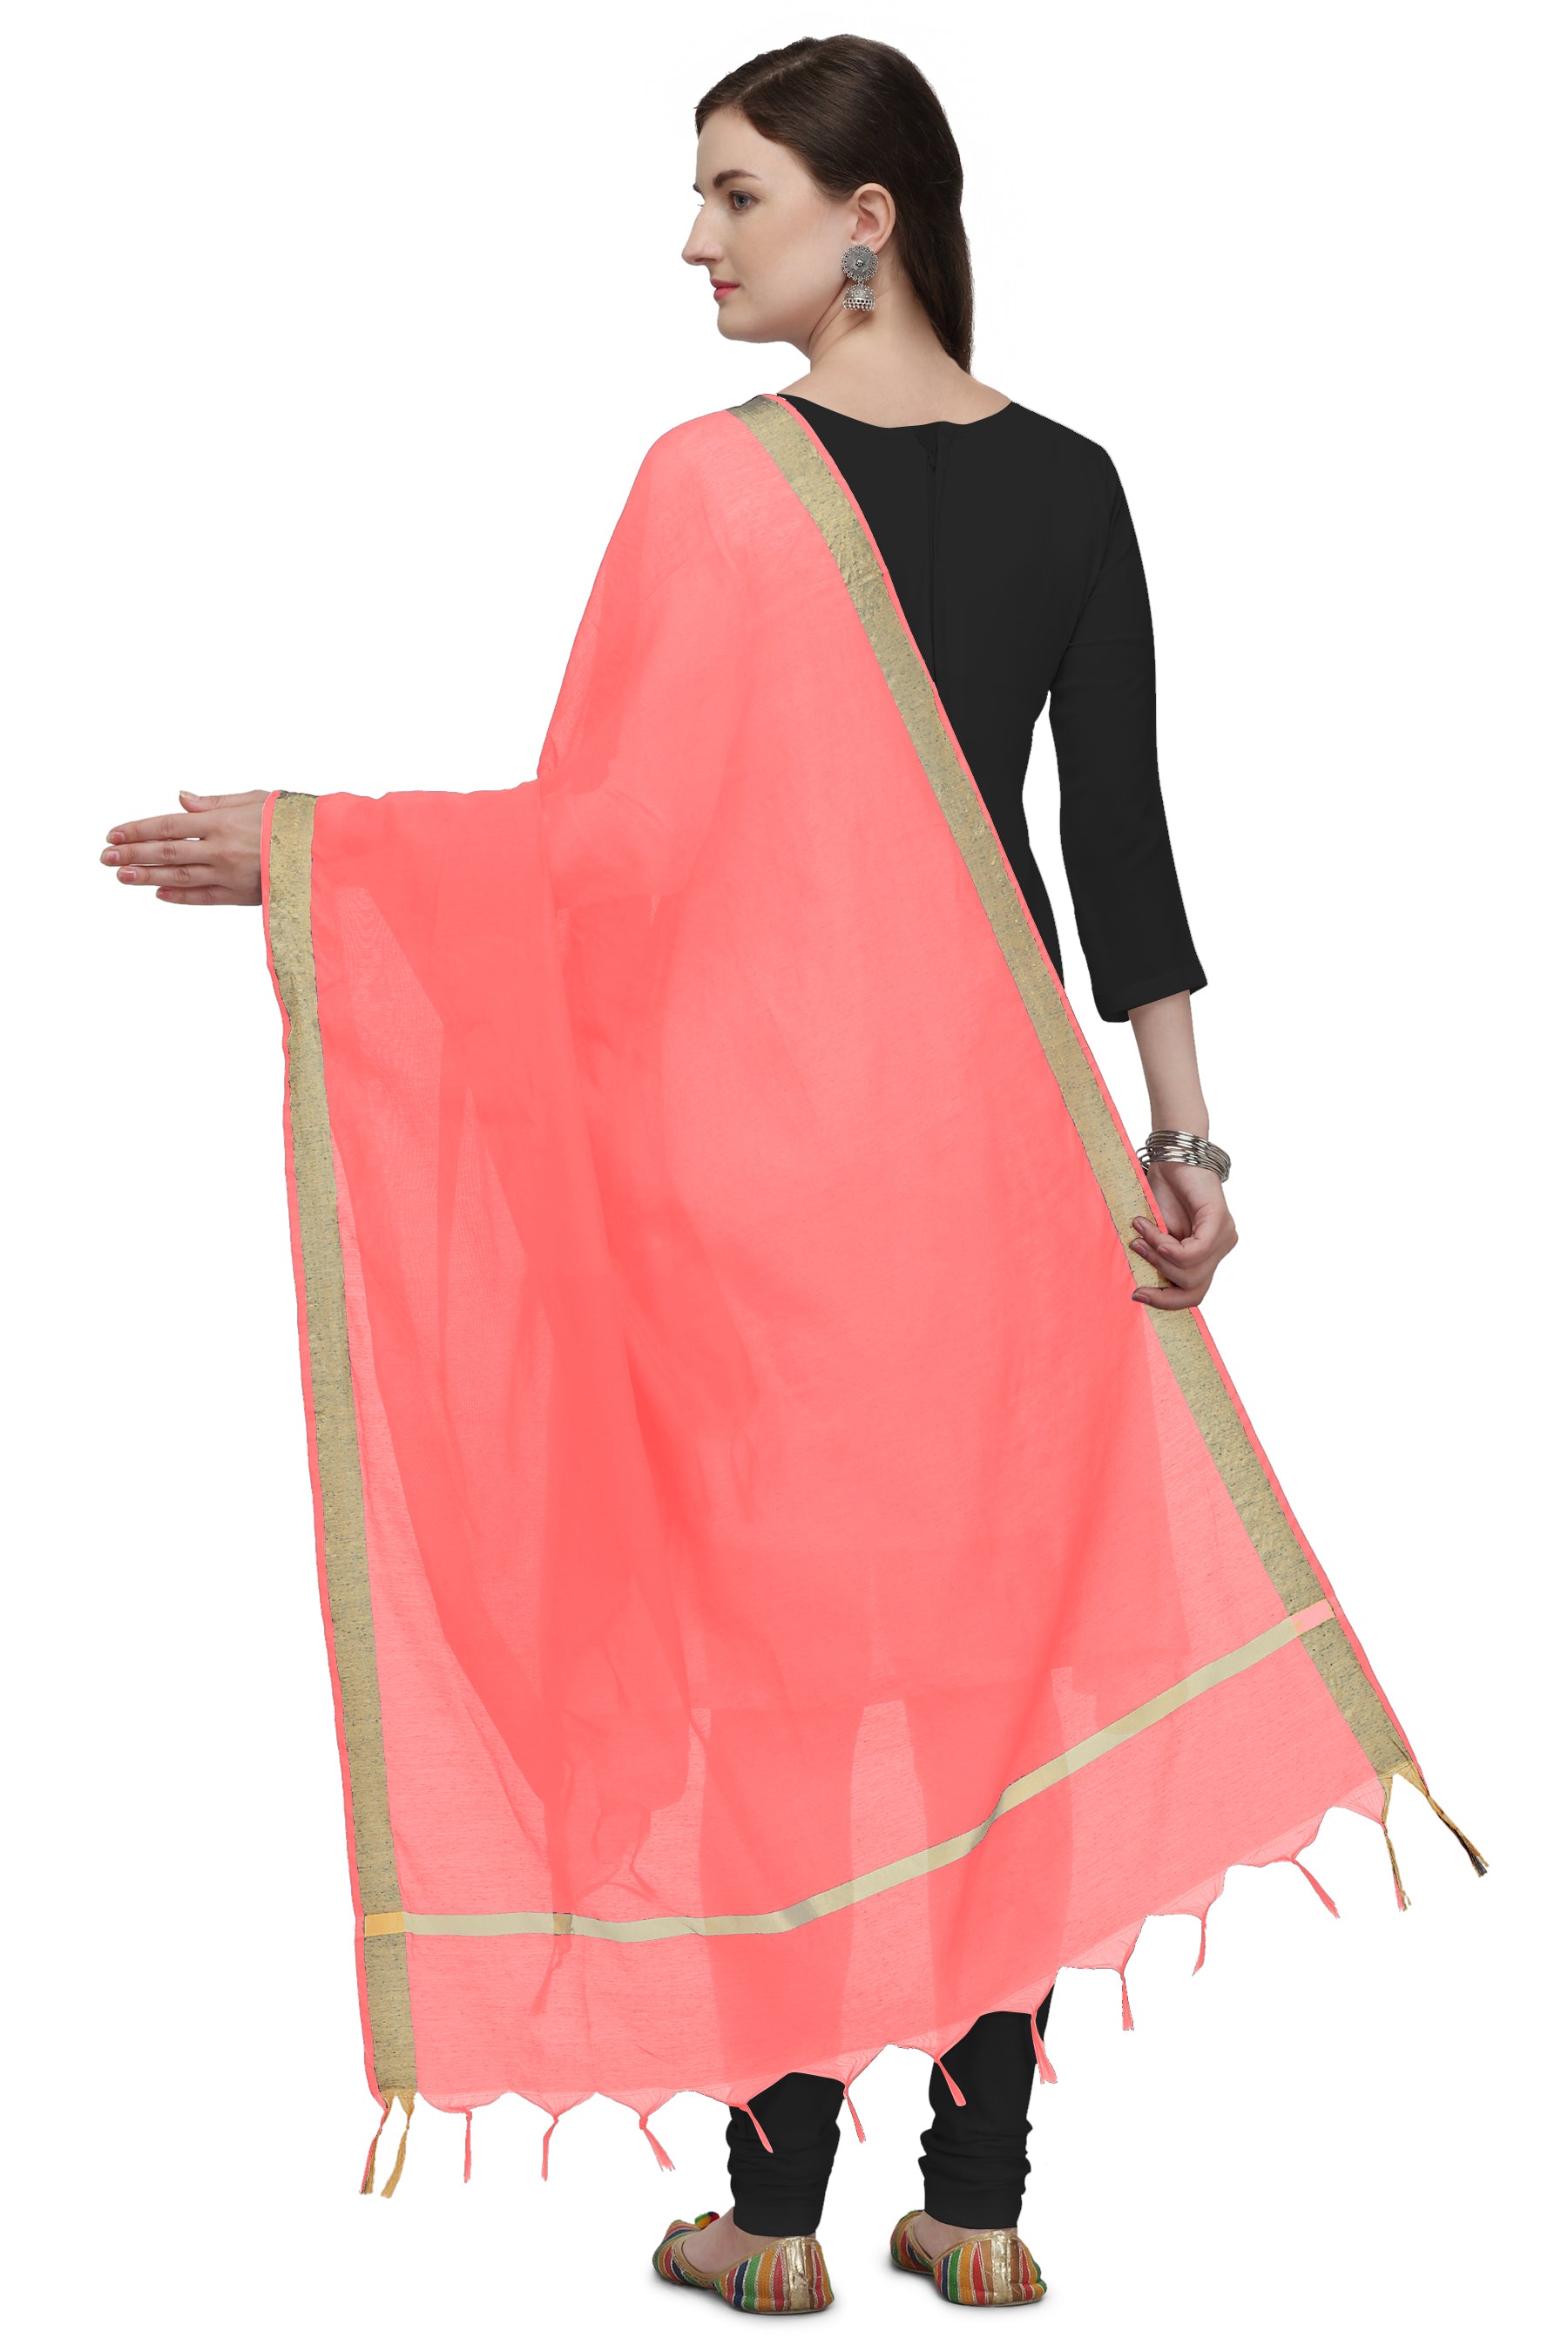 Women's Baby Pink Solid Self Woven Gold Zari Border Cotton Silk Dupatta With Tassles - NIMIDHYA